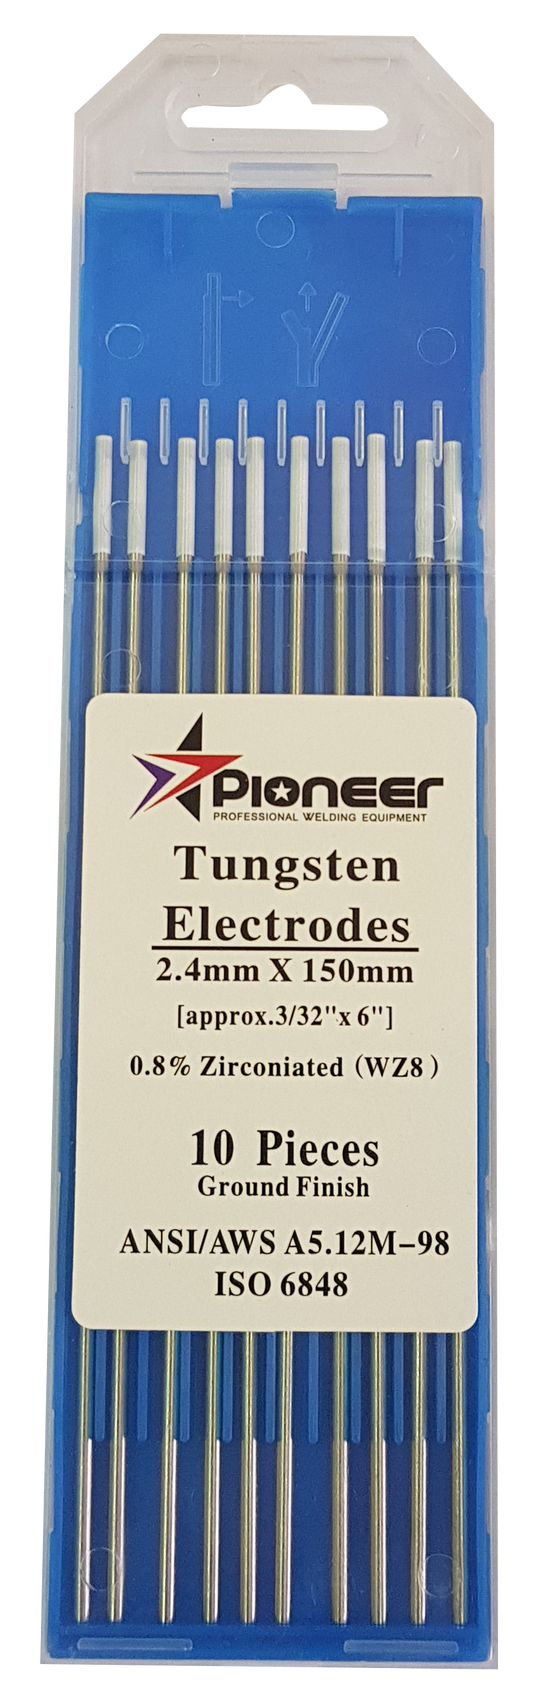 Tungsten Electrode Zinconiated